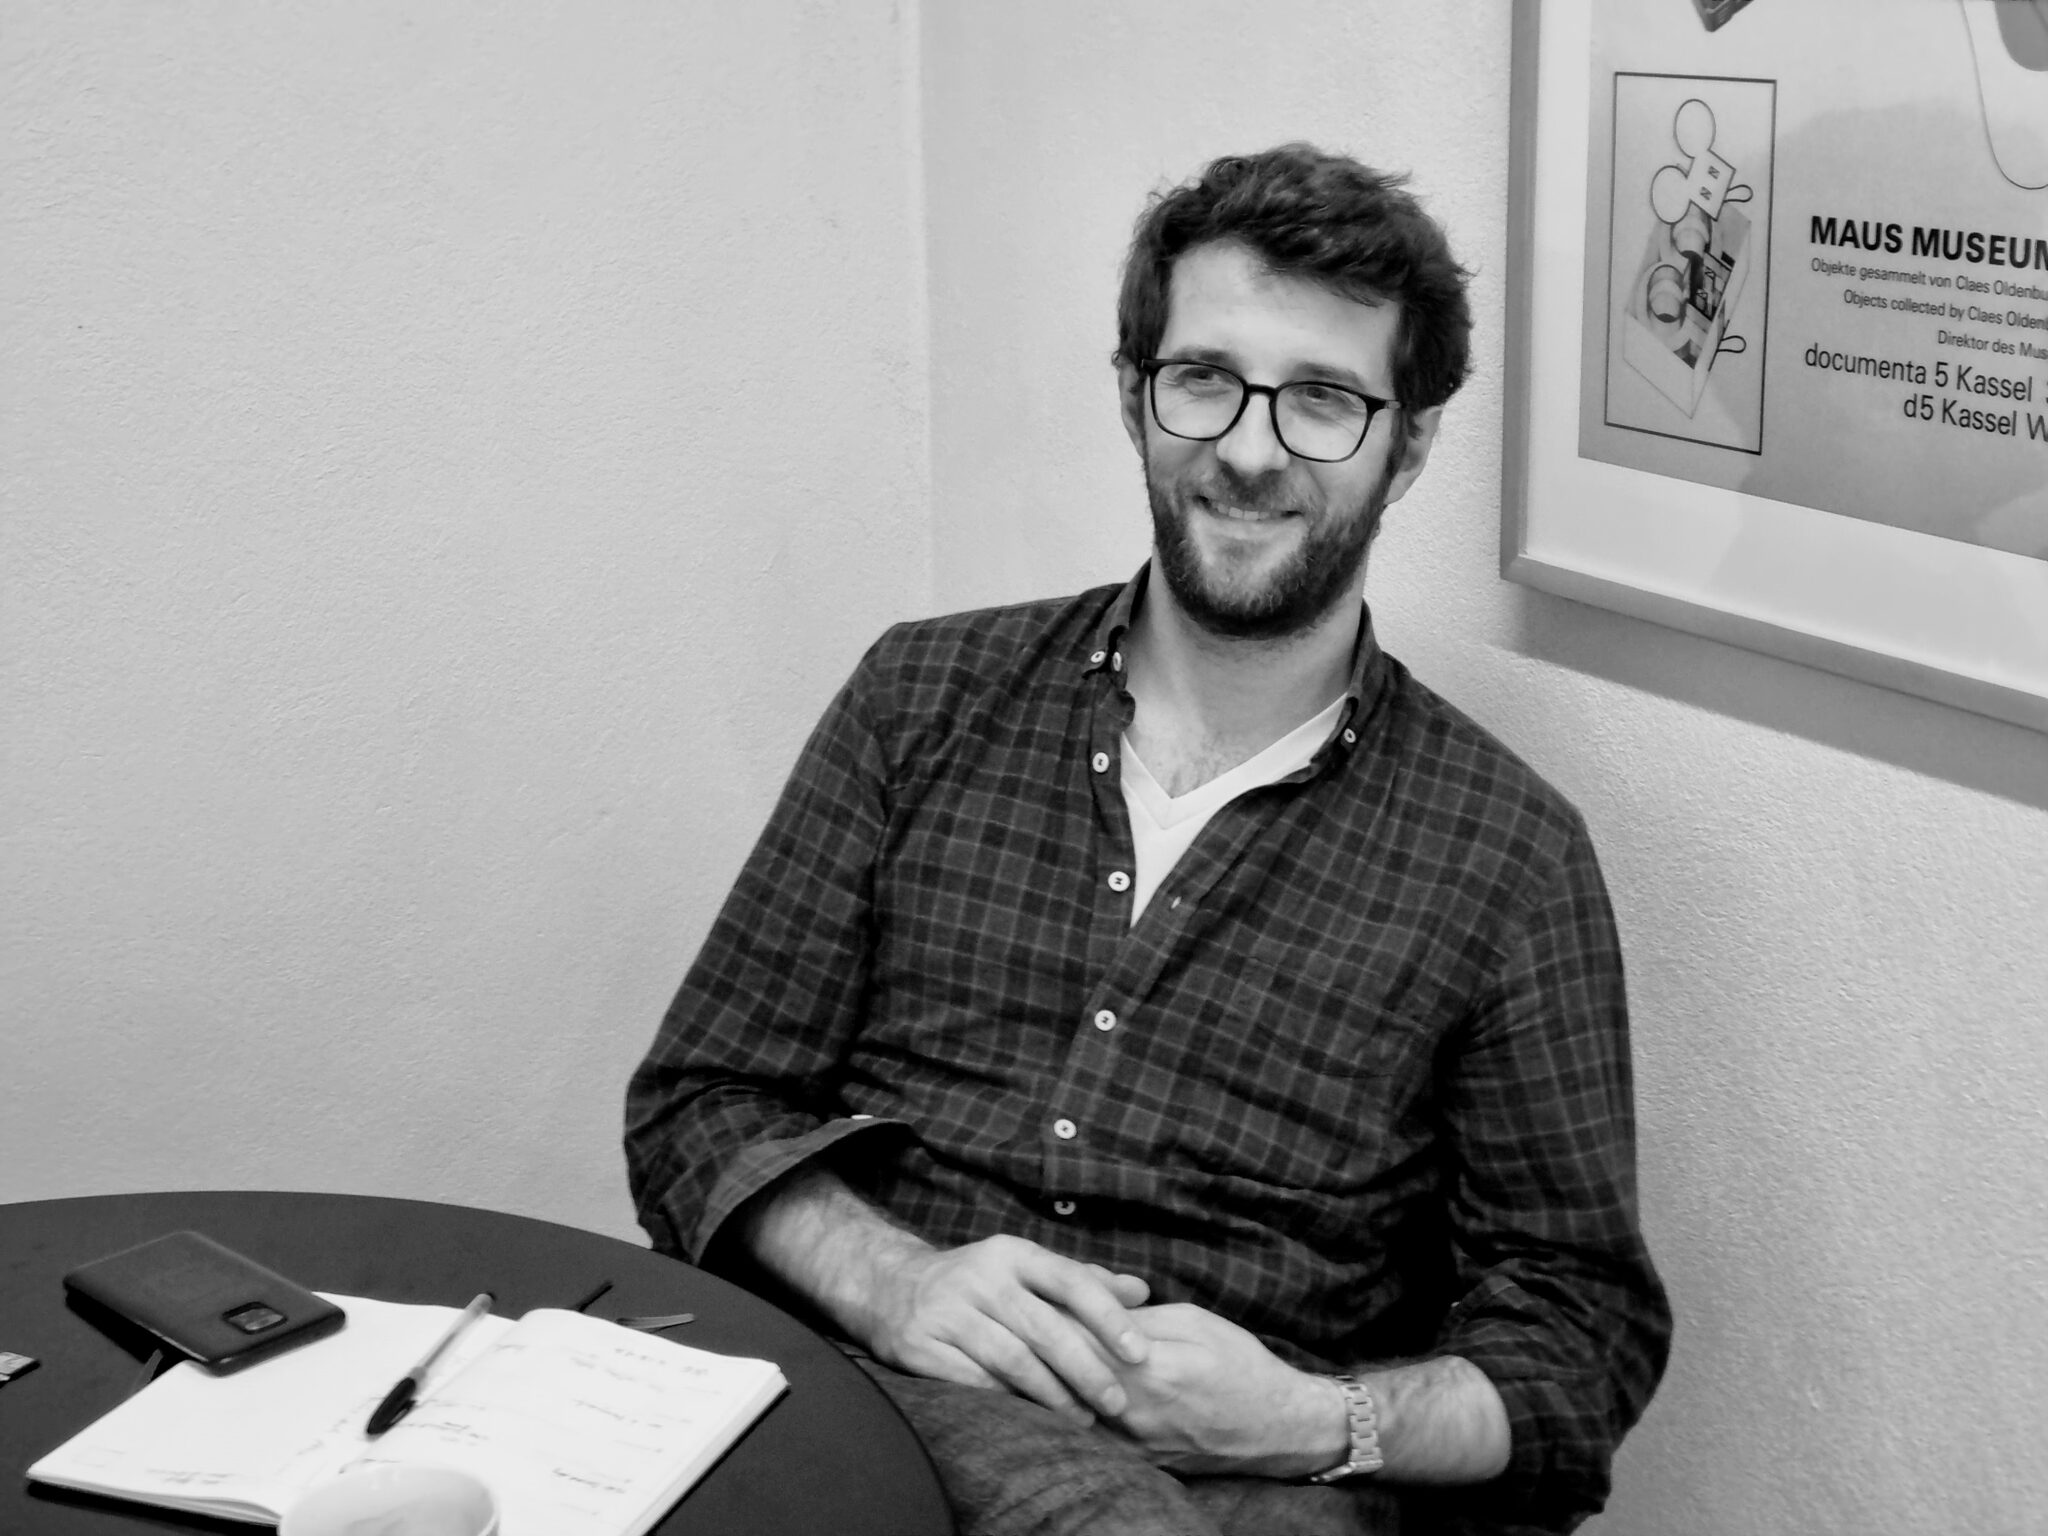 A Horological Interview with Paul Bernard, the Bienne Contemporary Art Center’s New Director